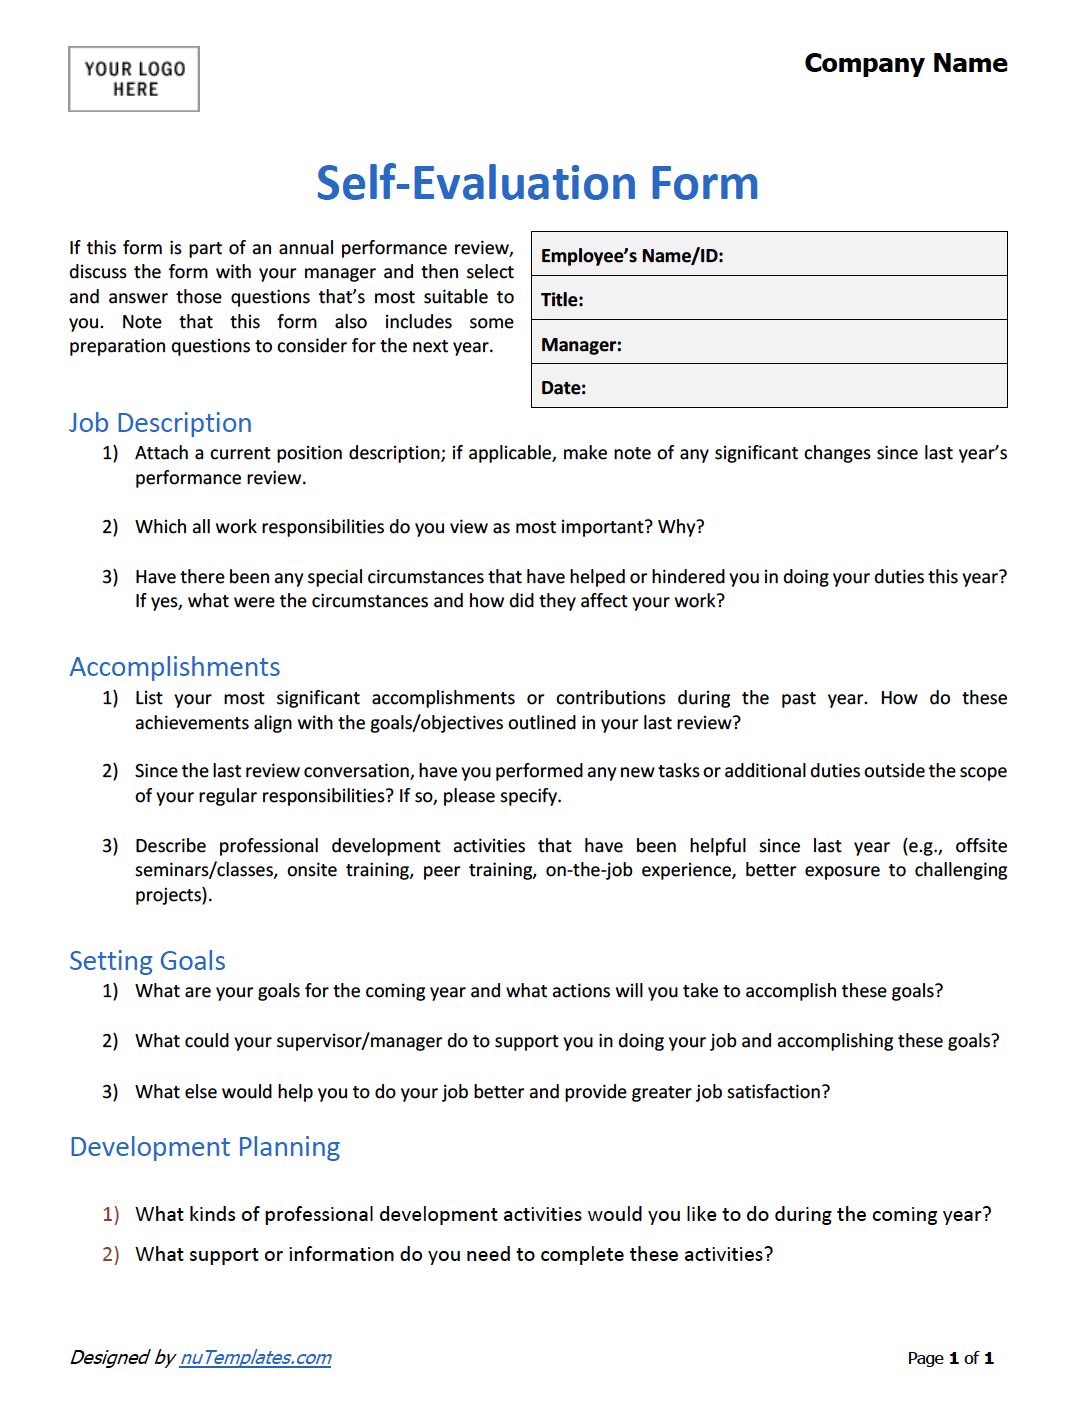 employee-self-evaluation-form